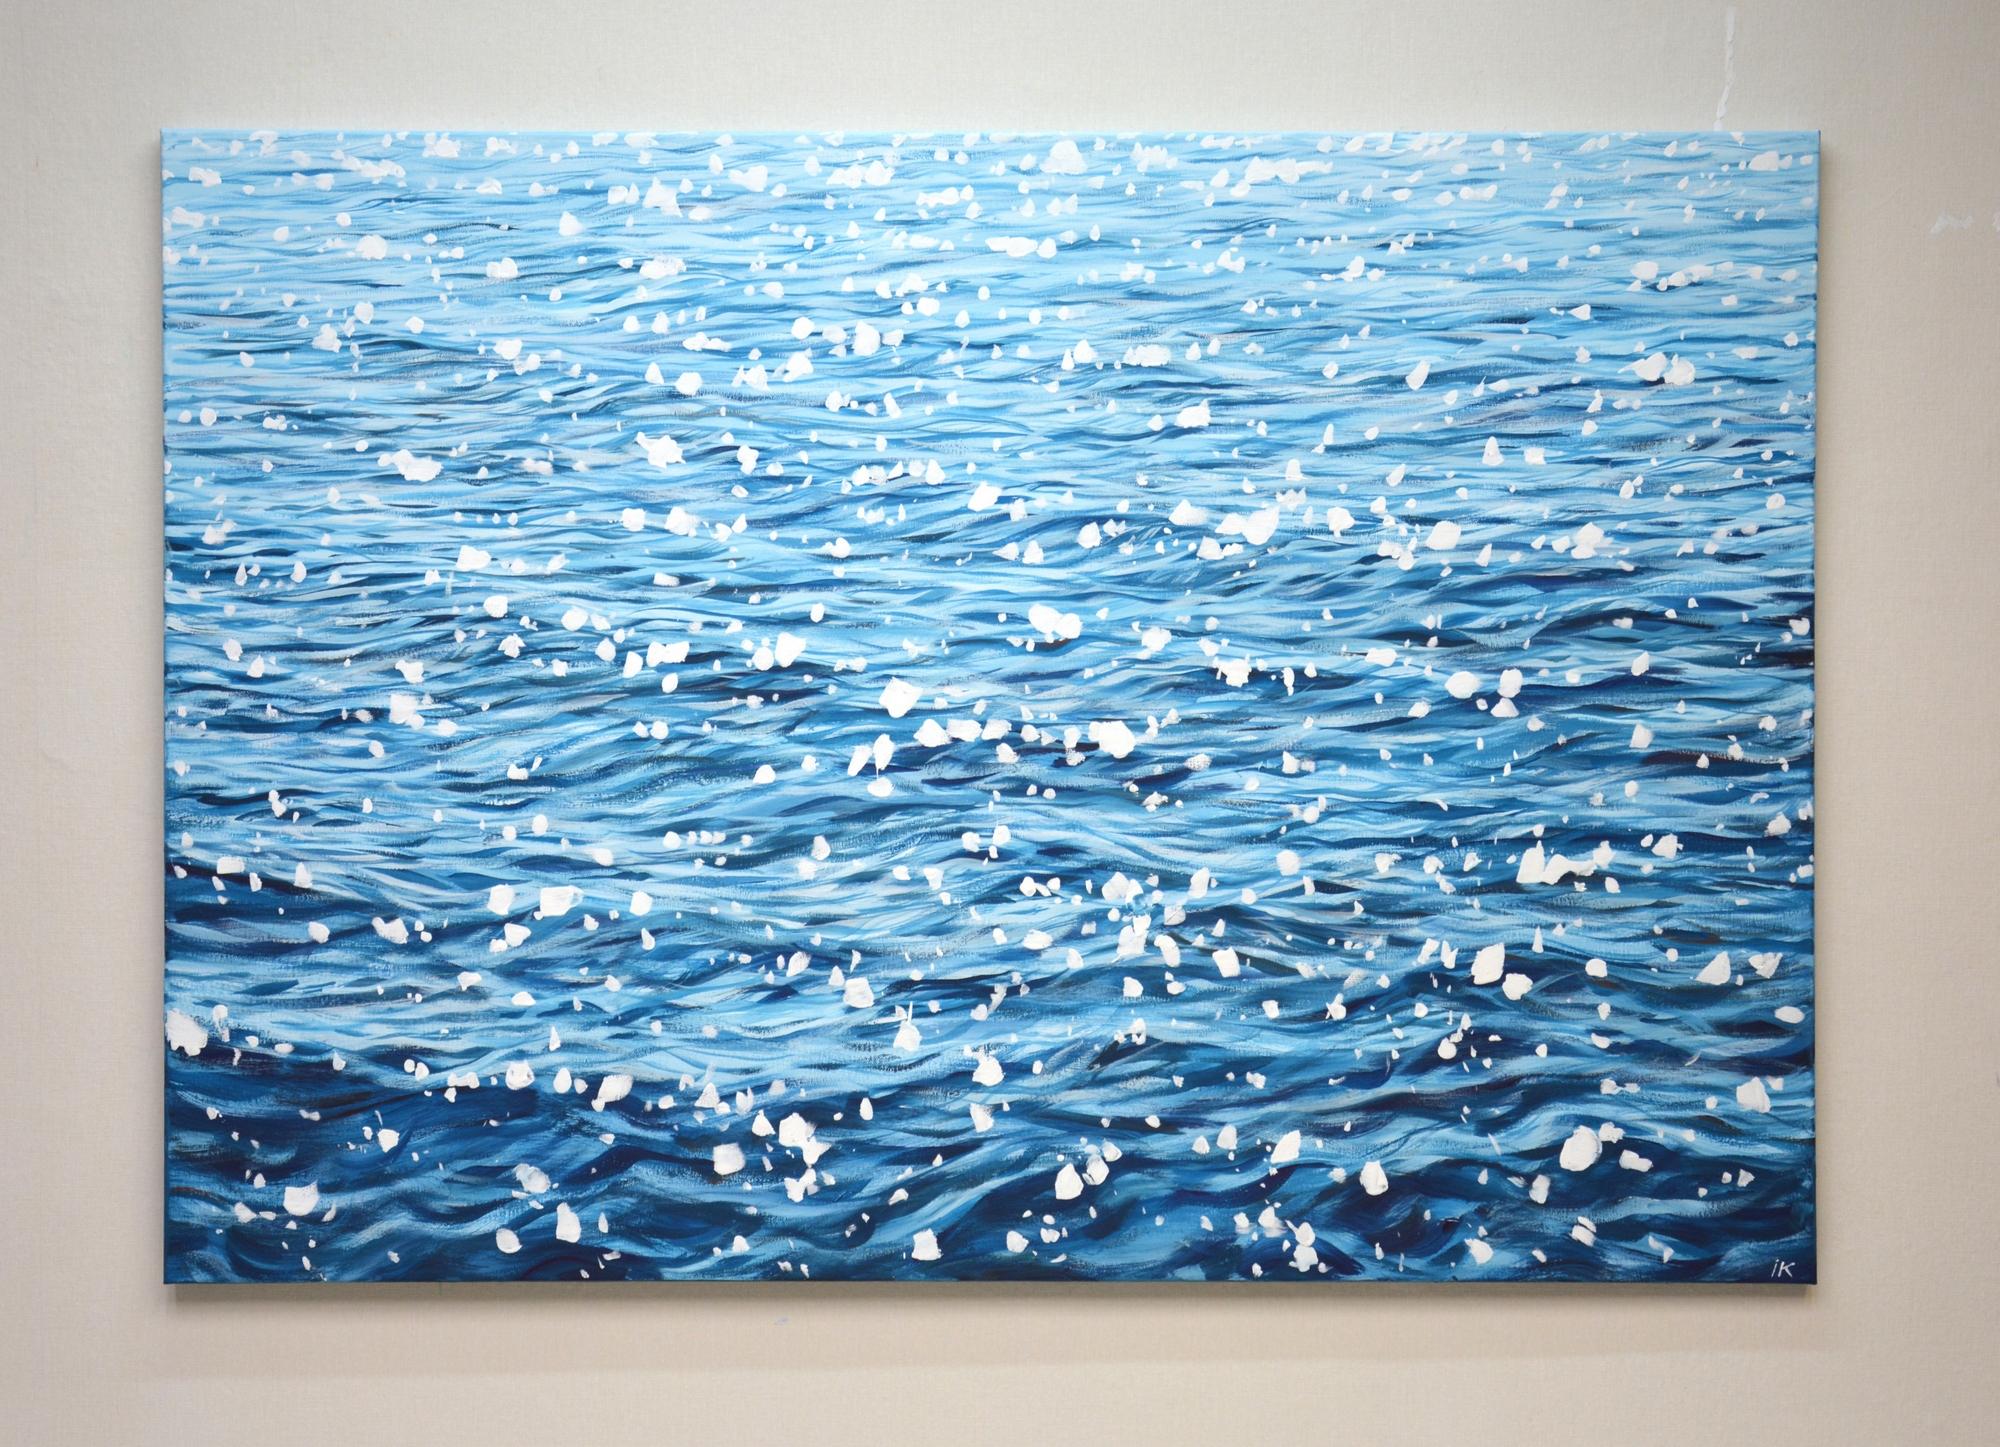 			Glare on blue water. - Painting by Iryna Kastsova